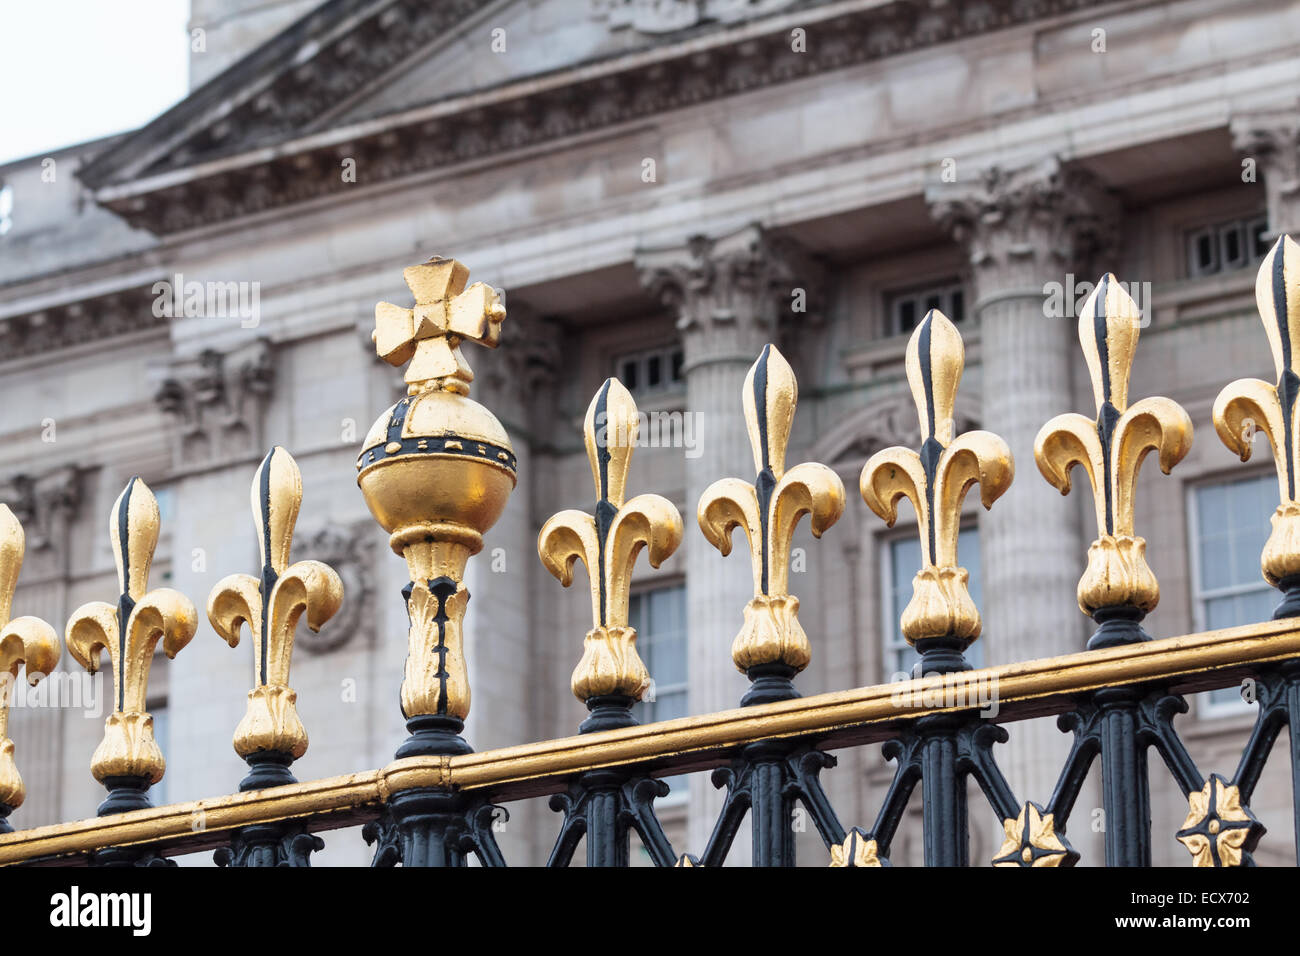 Golden fleur de Lis on the gates of Buckingham Palace, London, UK Stock Photo